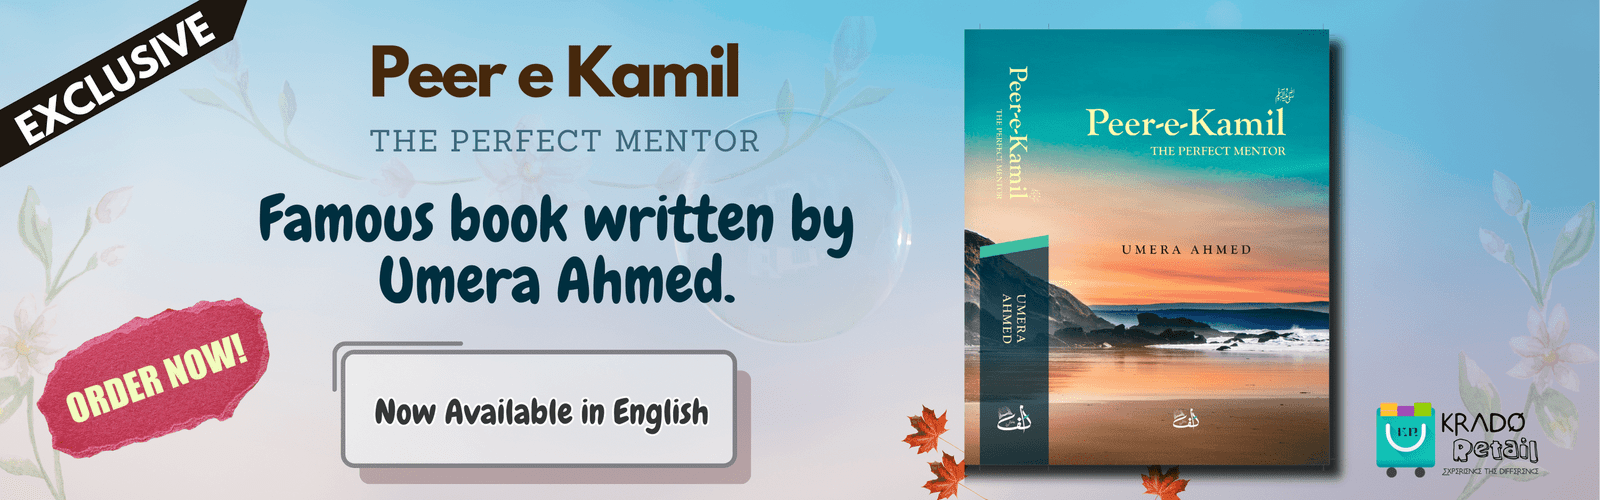 Peer e kamil the perfect mentor